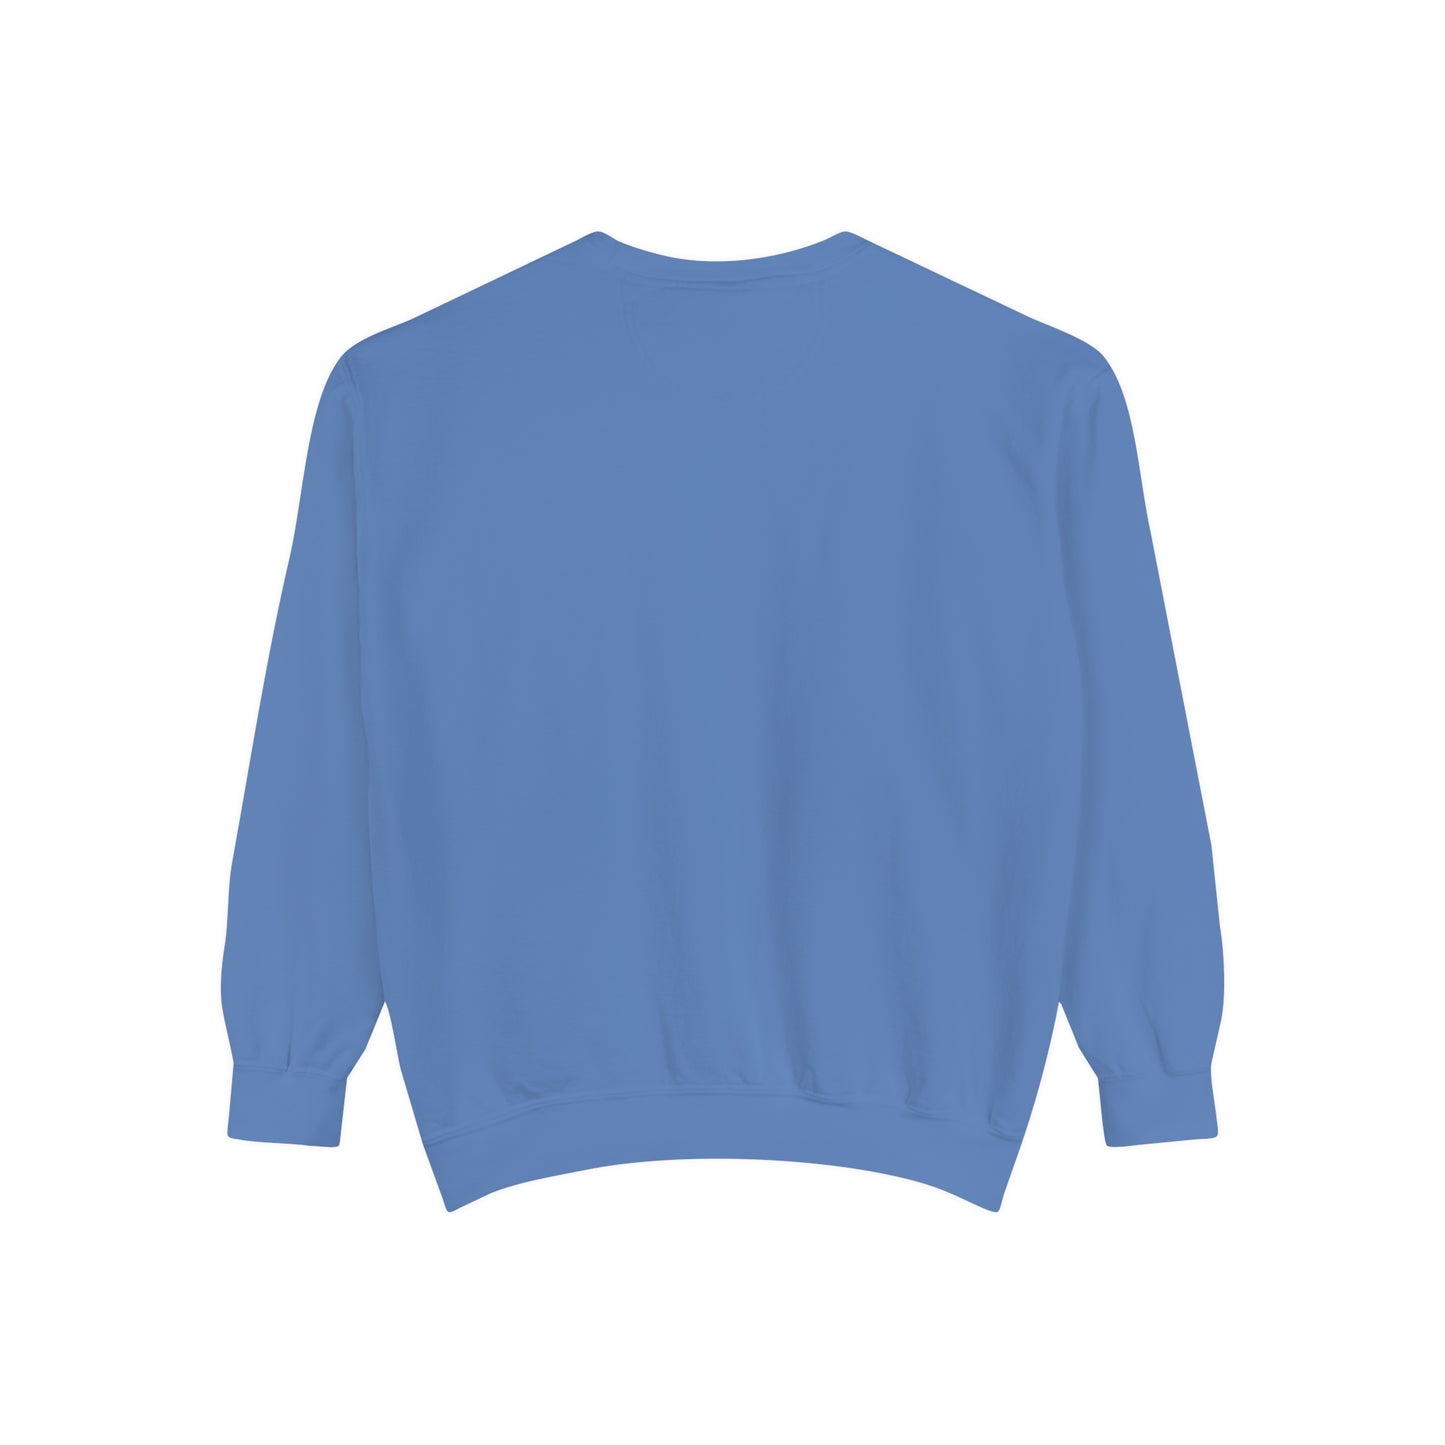 Baller - Unisex Garment-Dyed Sweatshirt